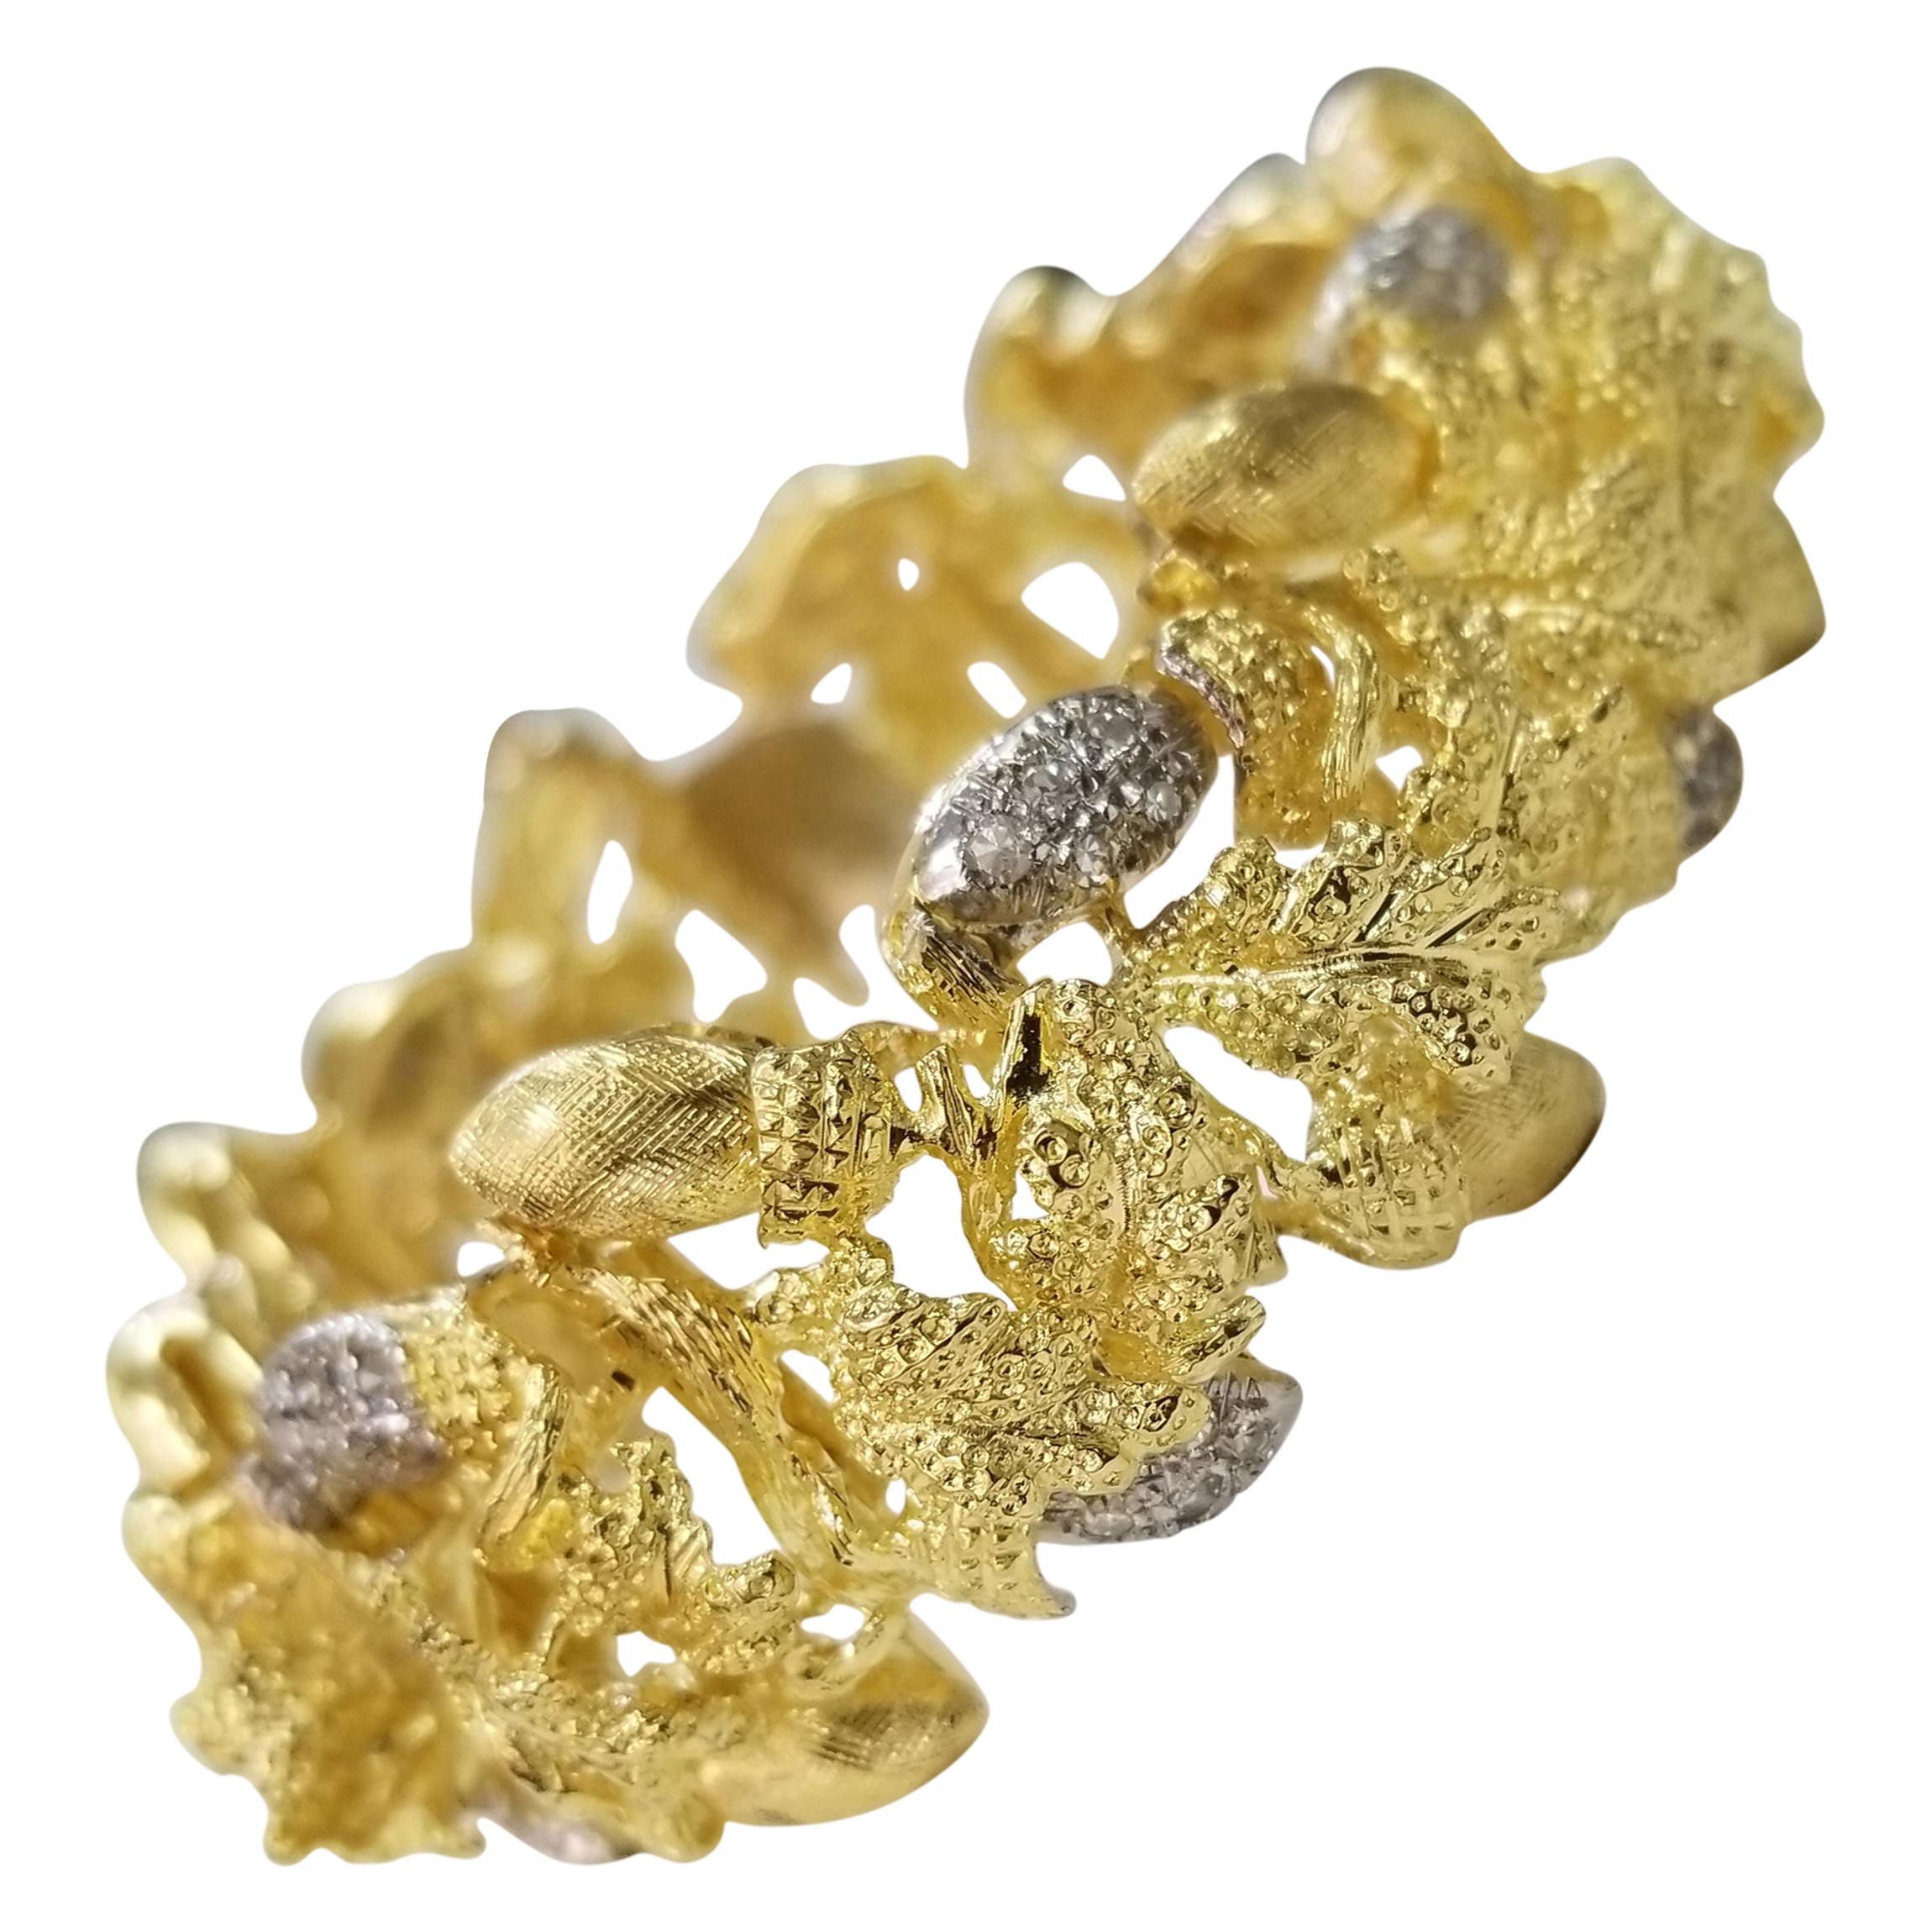 Circa 1960s Vintage 18 Karat Yellow Gold Diamond Acorn and Leaf Bracelet